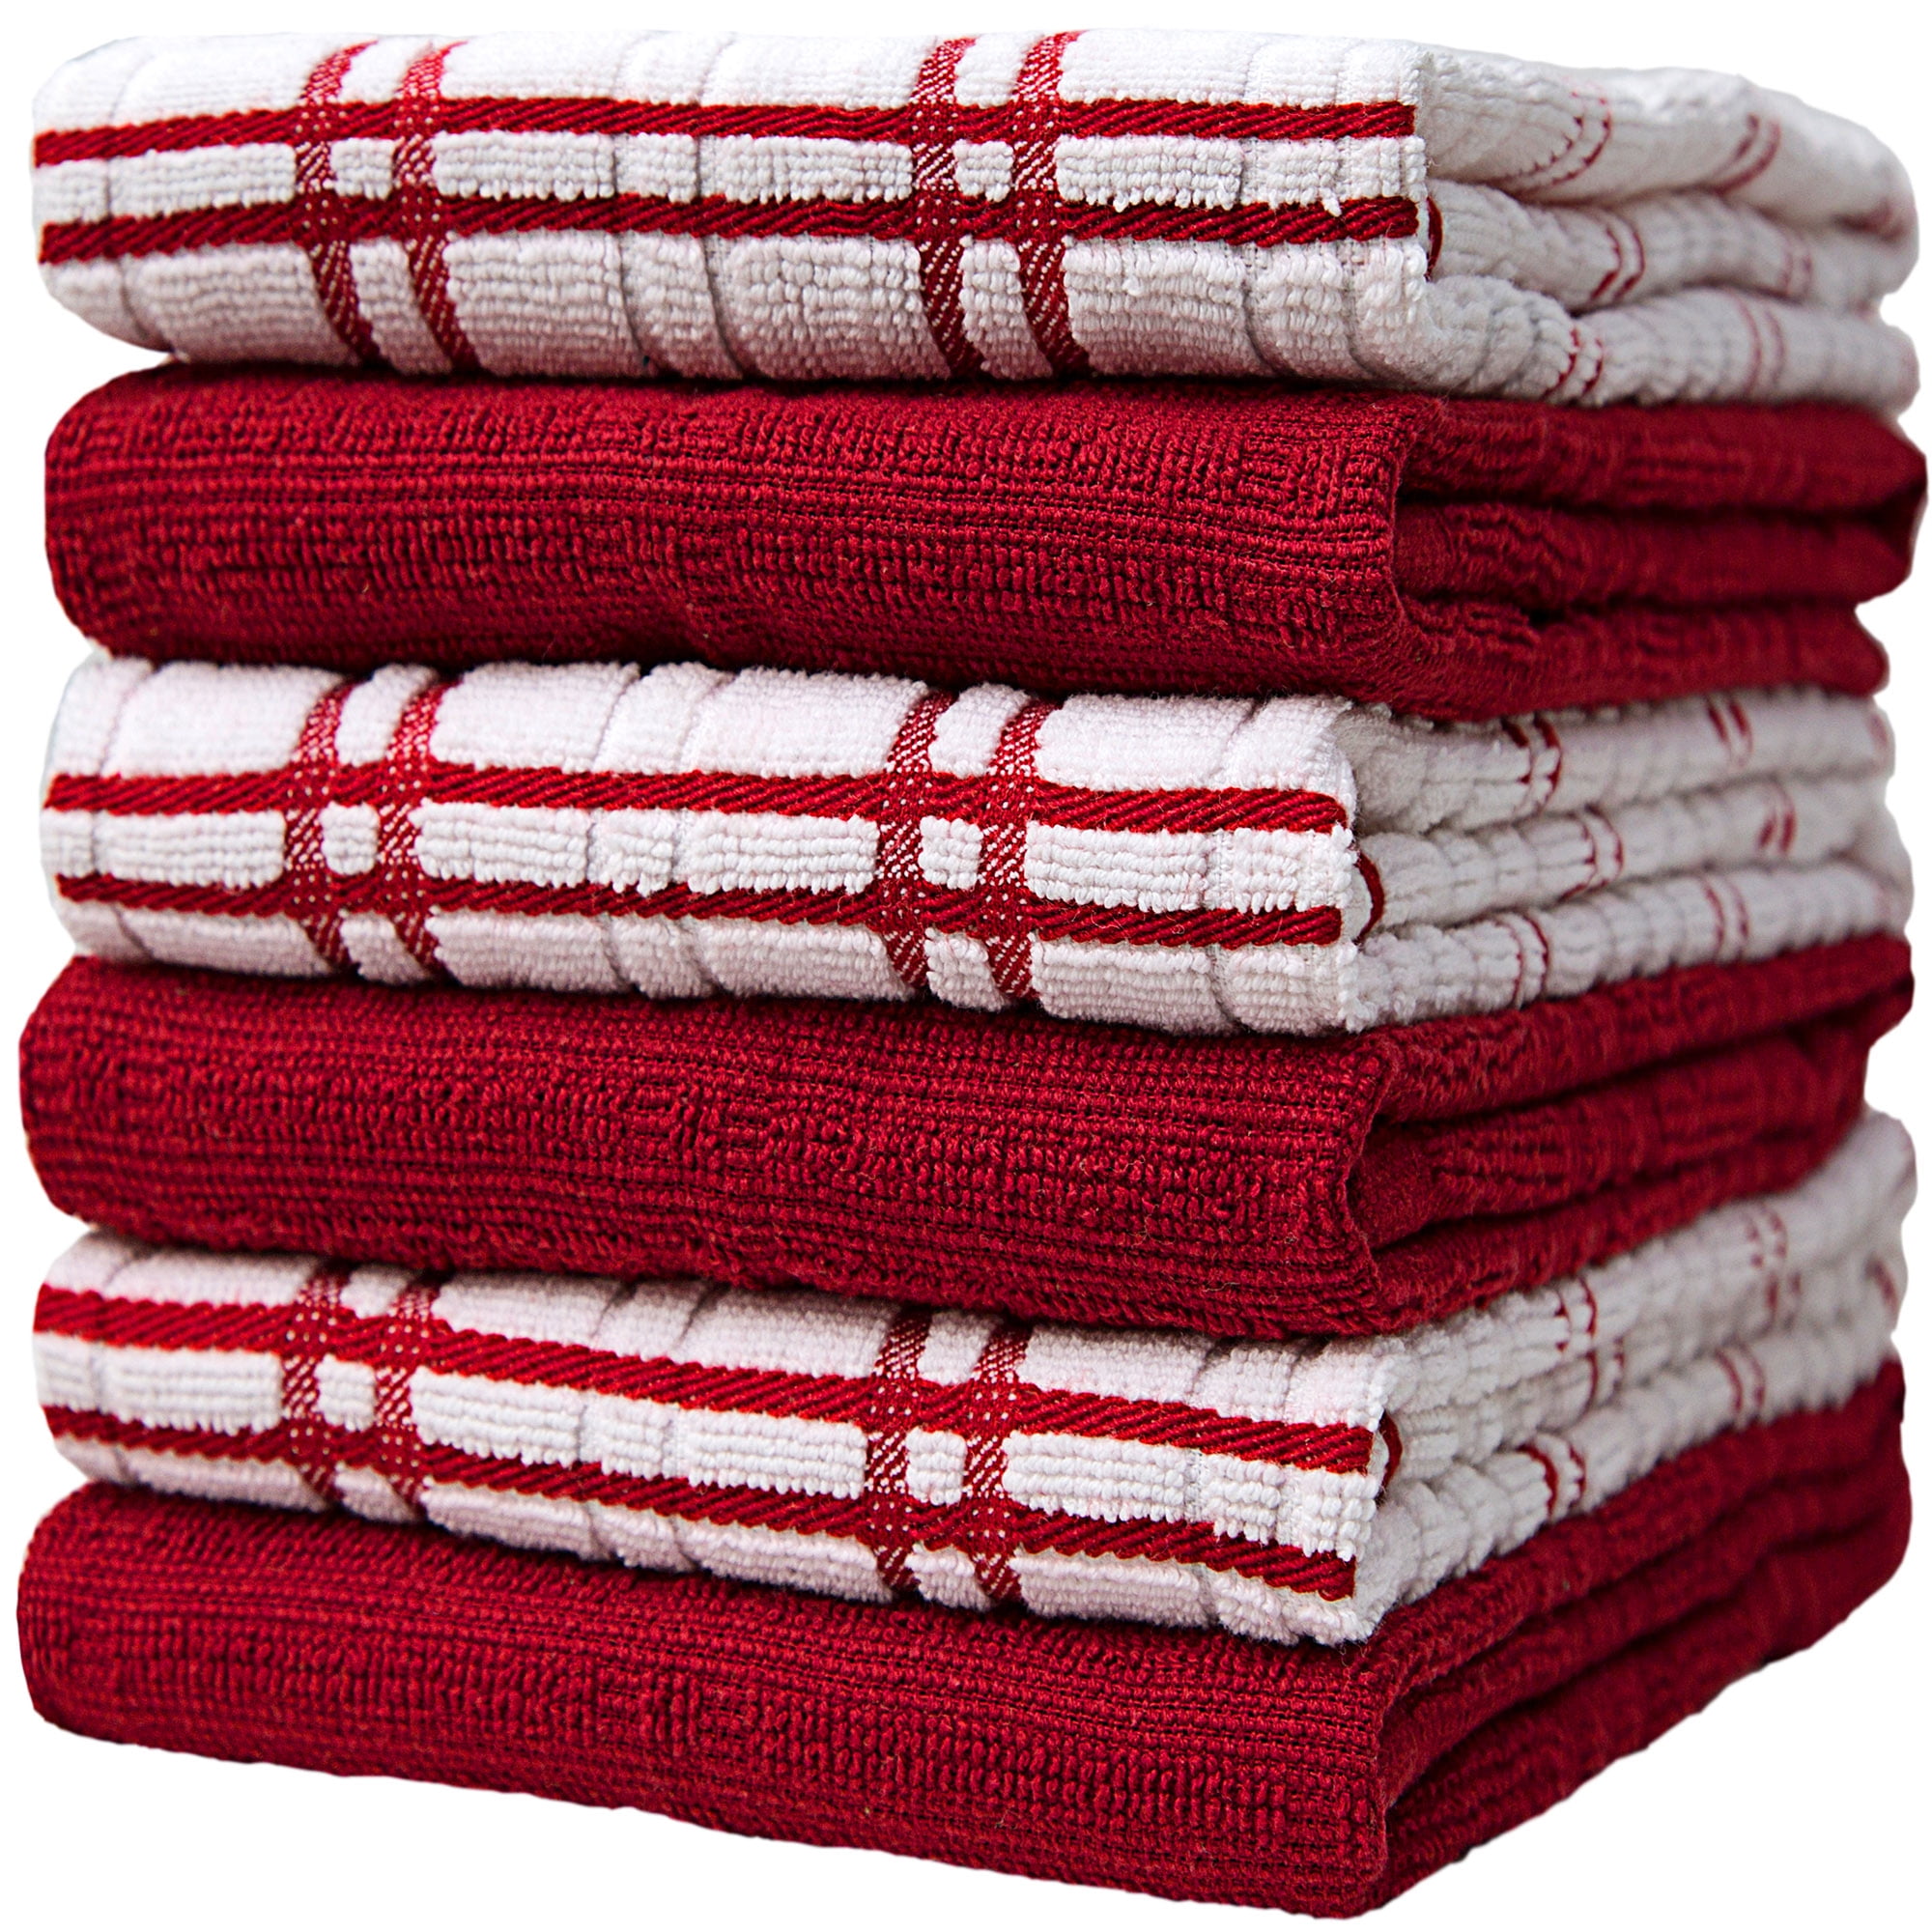 Premium Kitchen Towels (16”x 26”, 6 Pack) Large Cotton Kitchen Hand